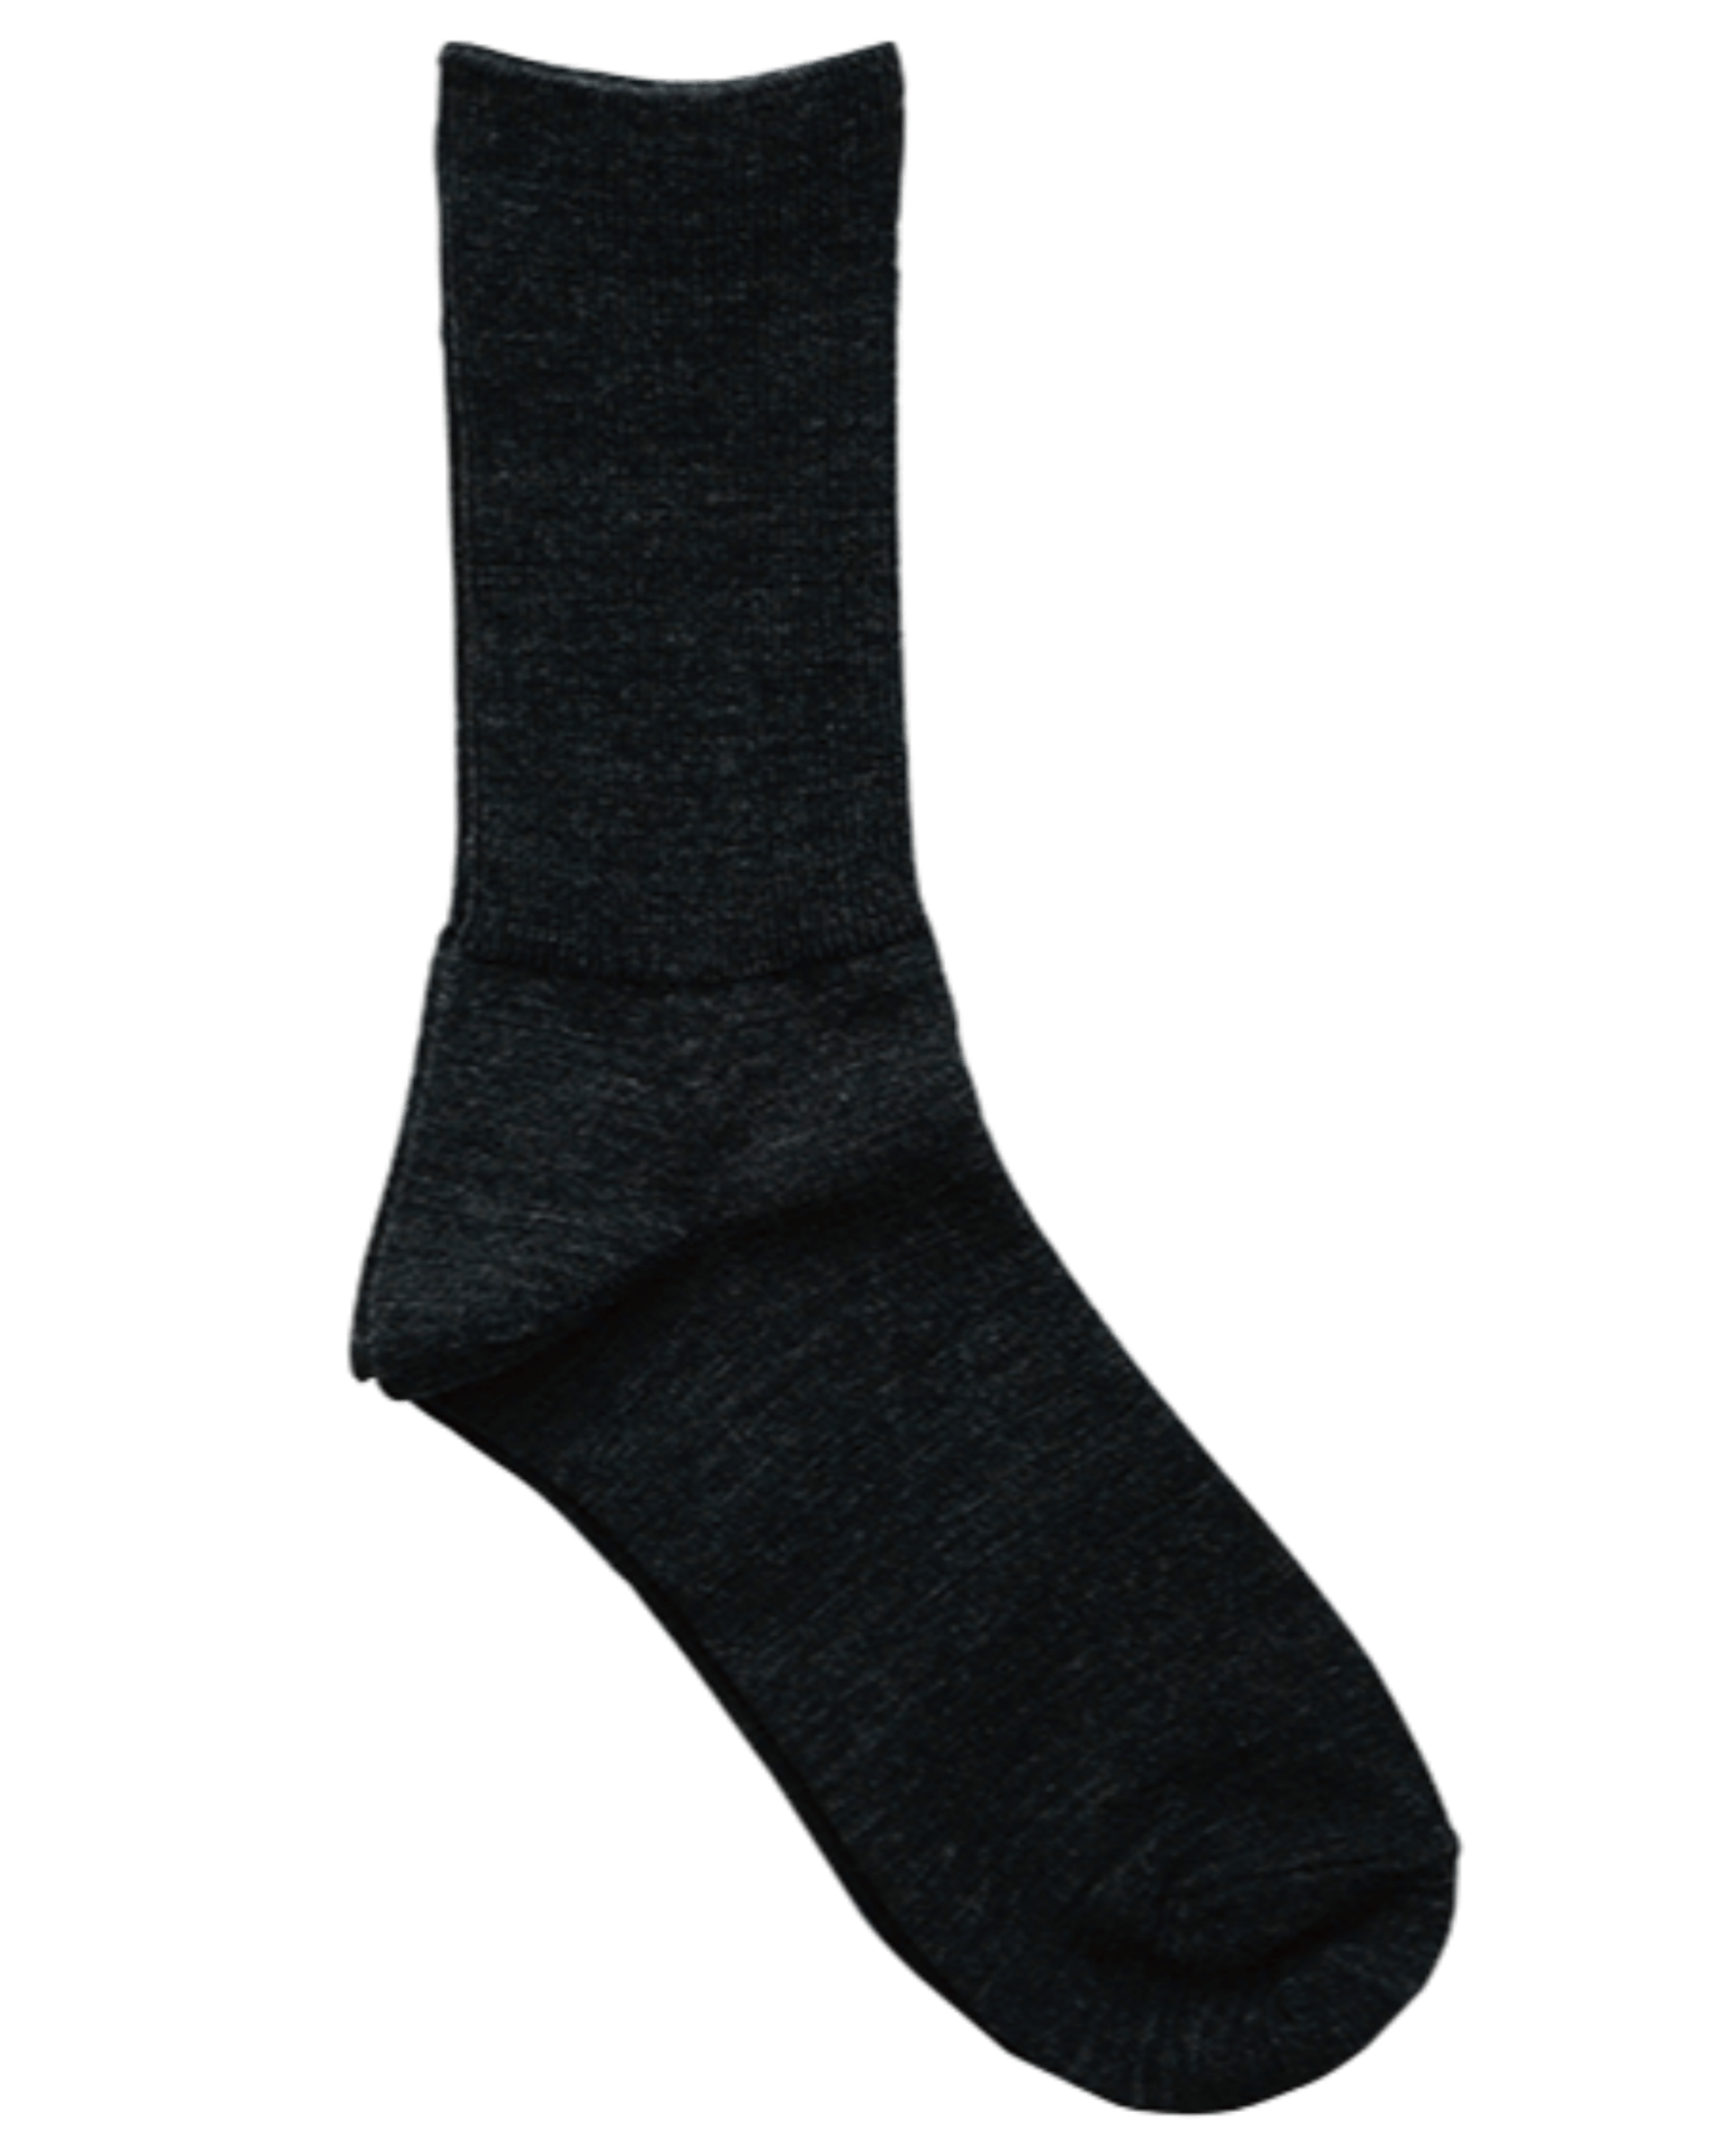 hakne : merino wool ribbed socks